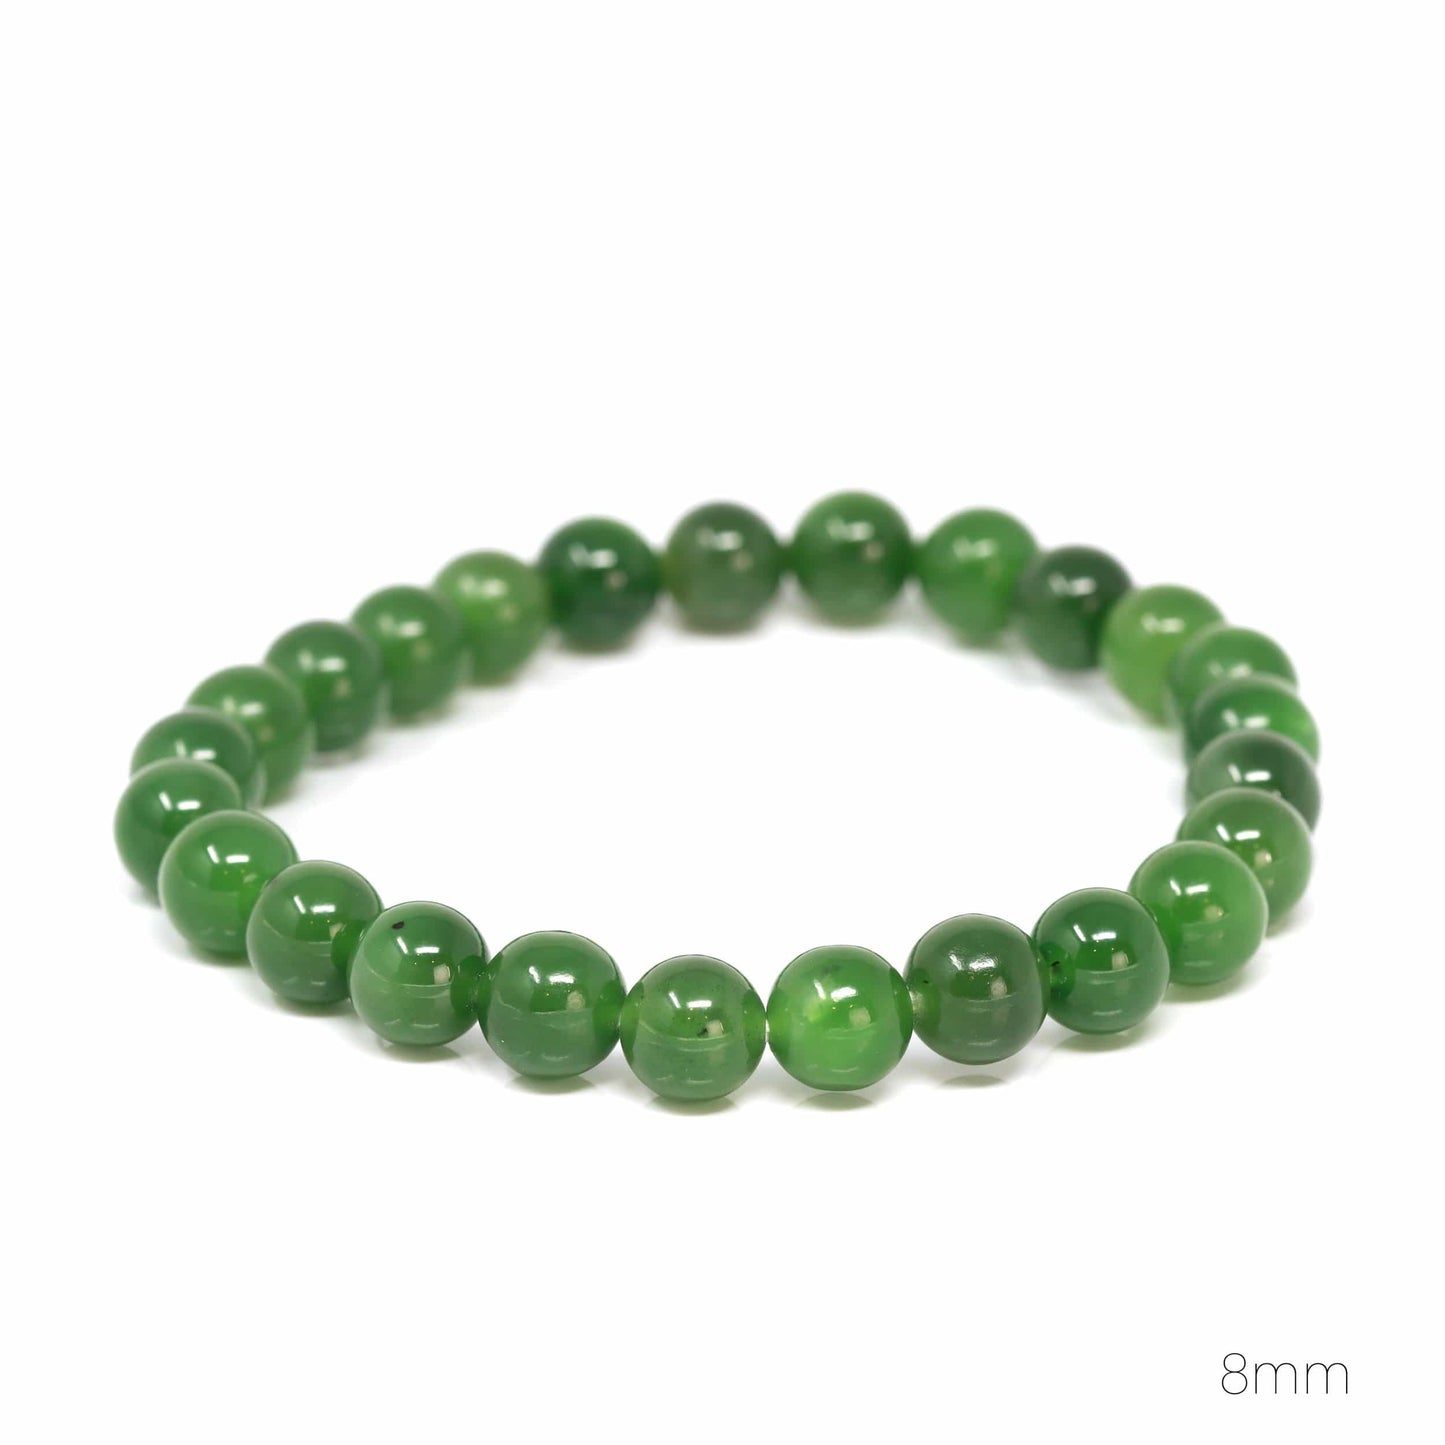 RealJade "Classic Bangle" Genuine Burmese High Quality Apple Green Jadeite Jade Bangle Bracelet (53.4mm) #541